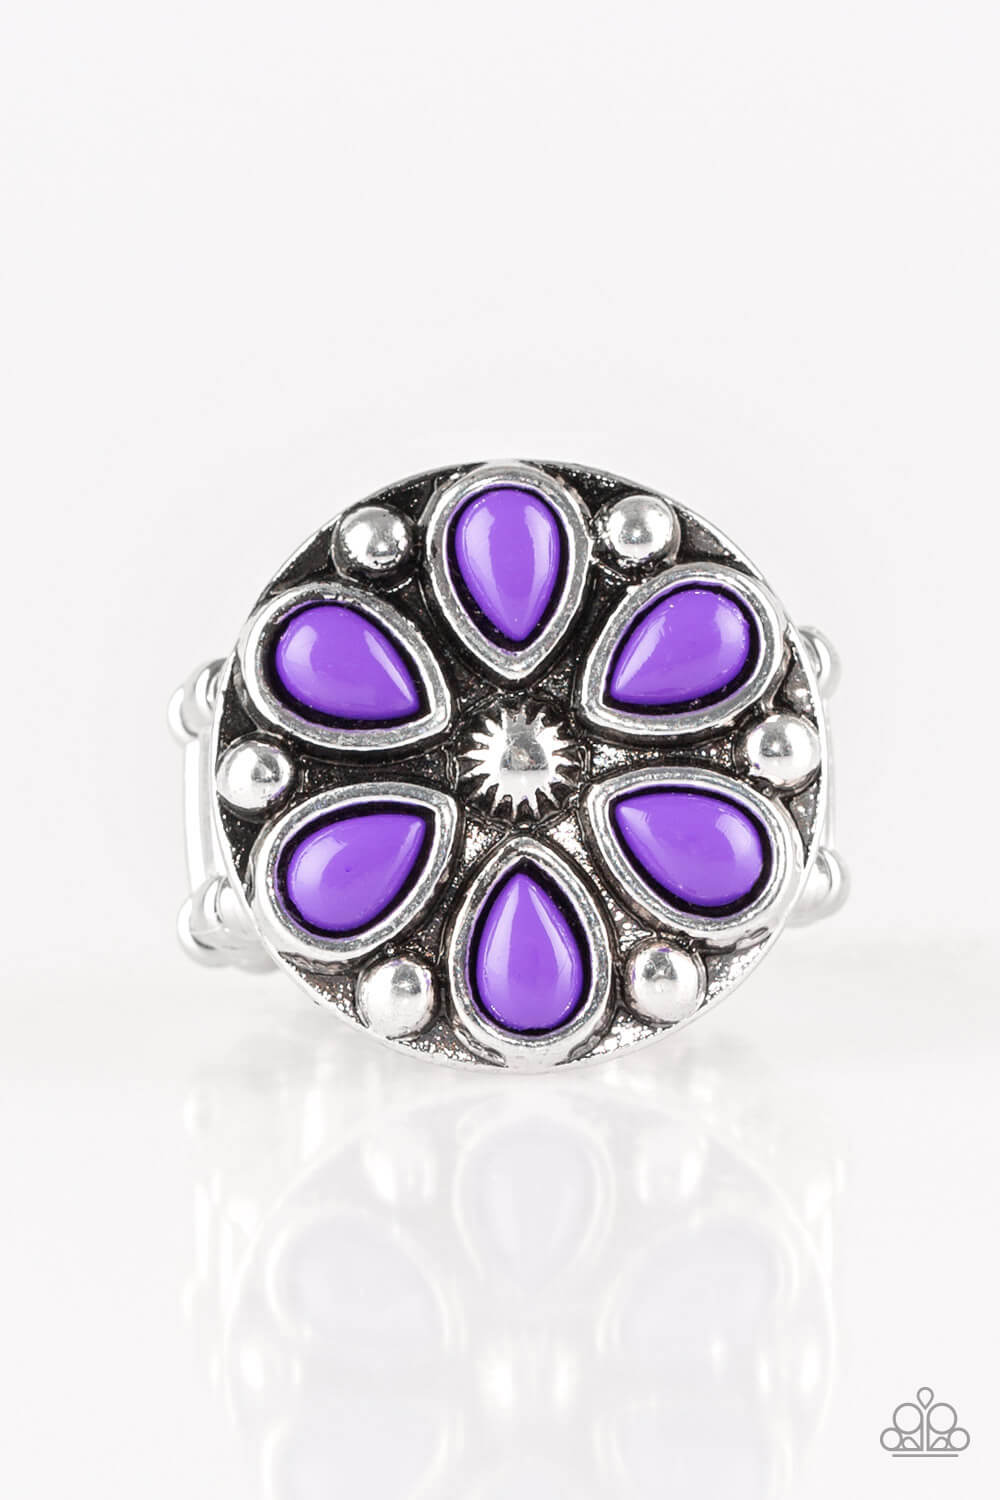 Color Me Calla Lily - Purple Ring - Princess Glam Shop